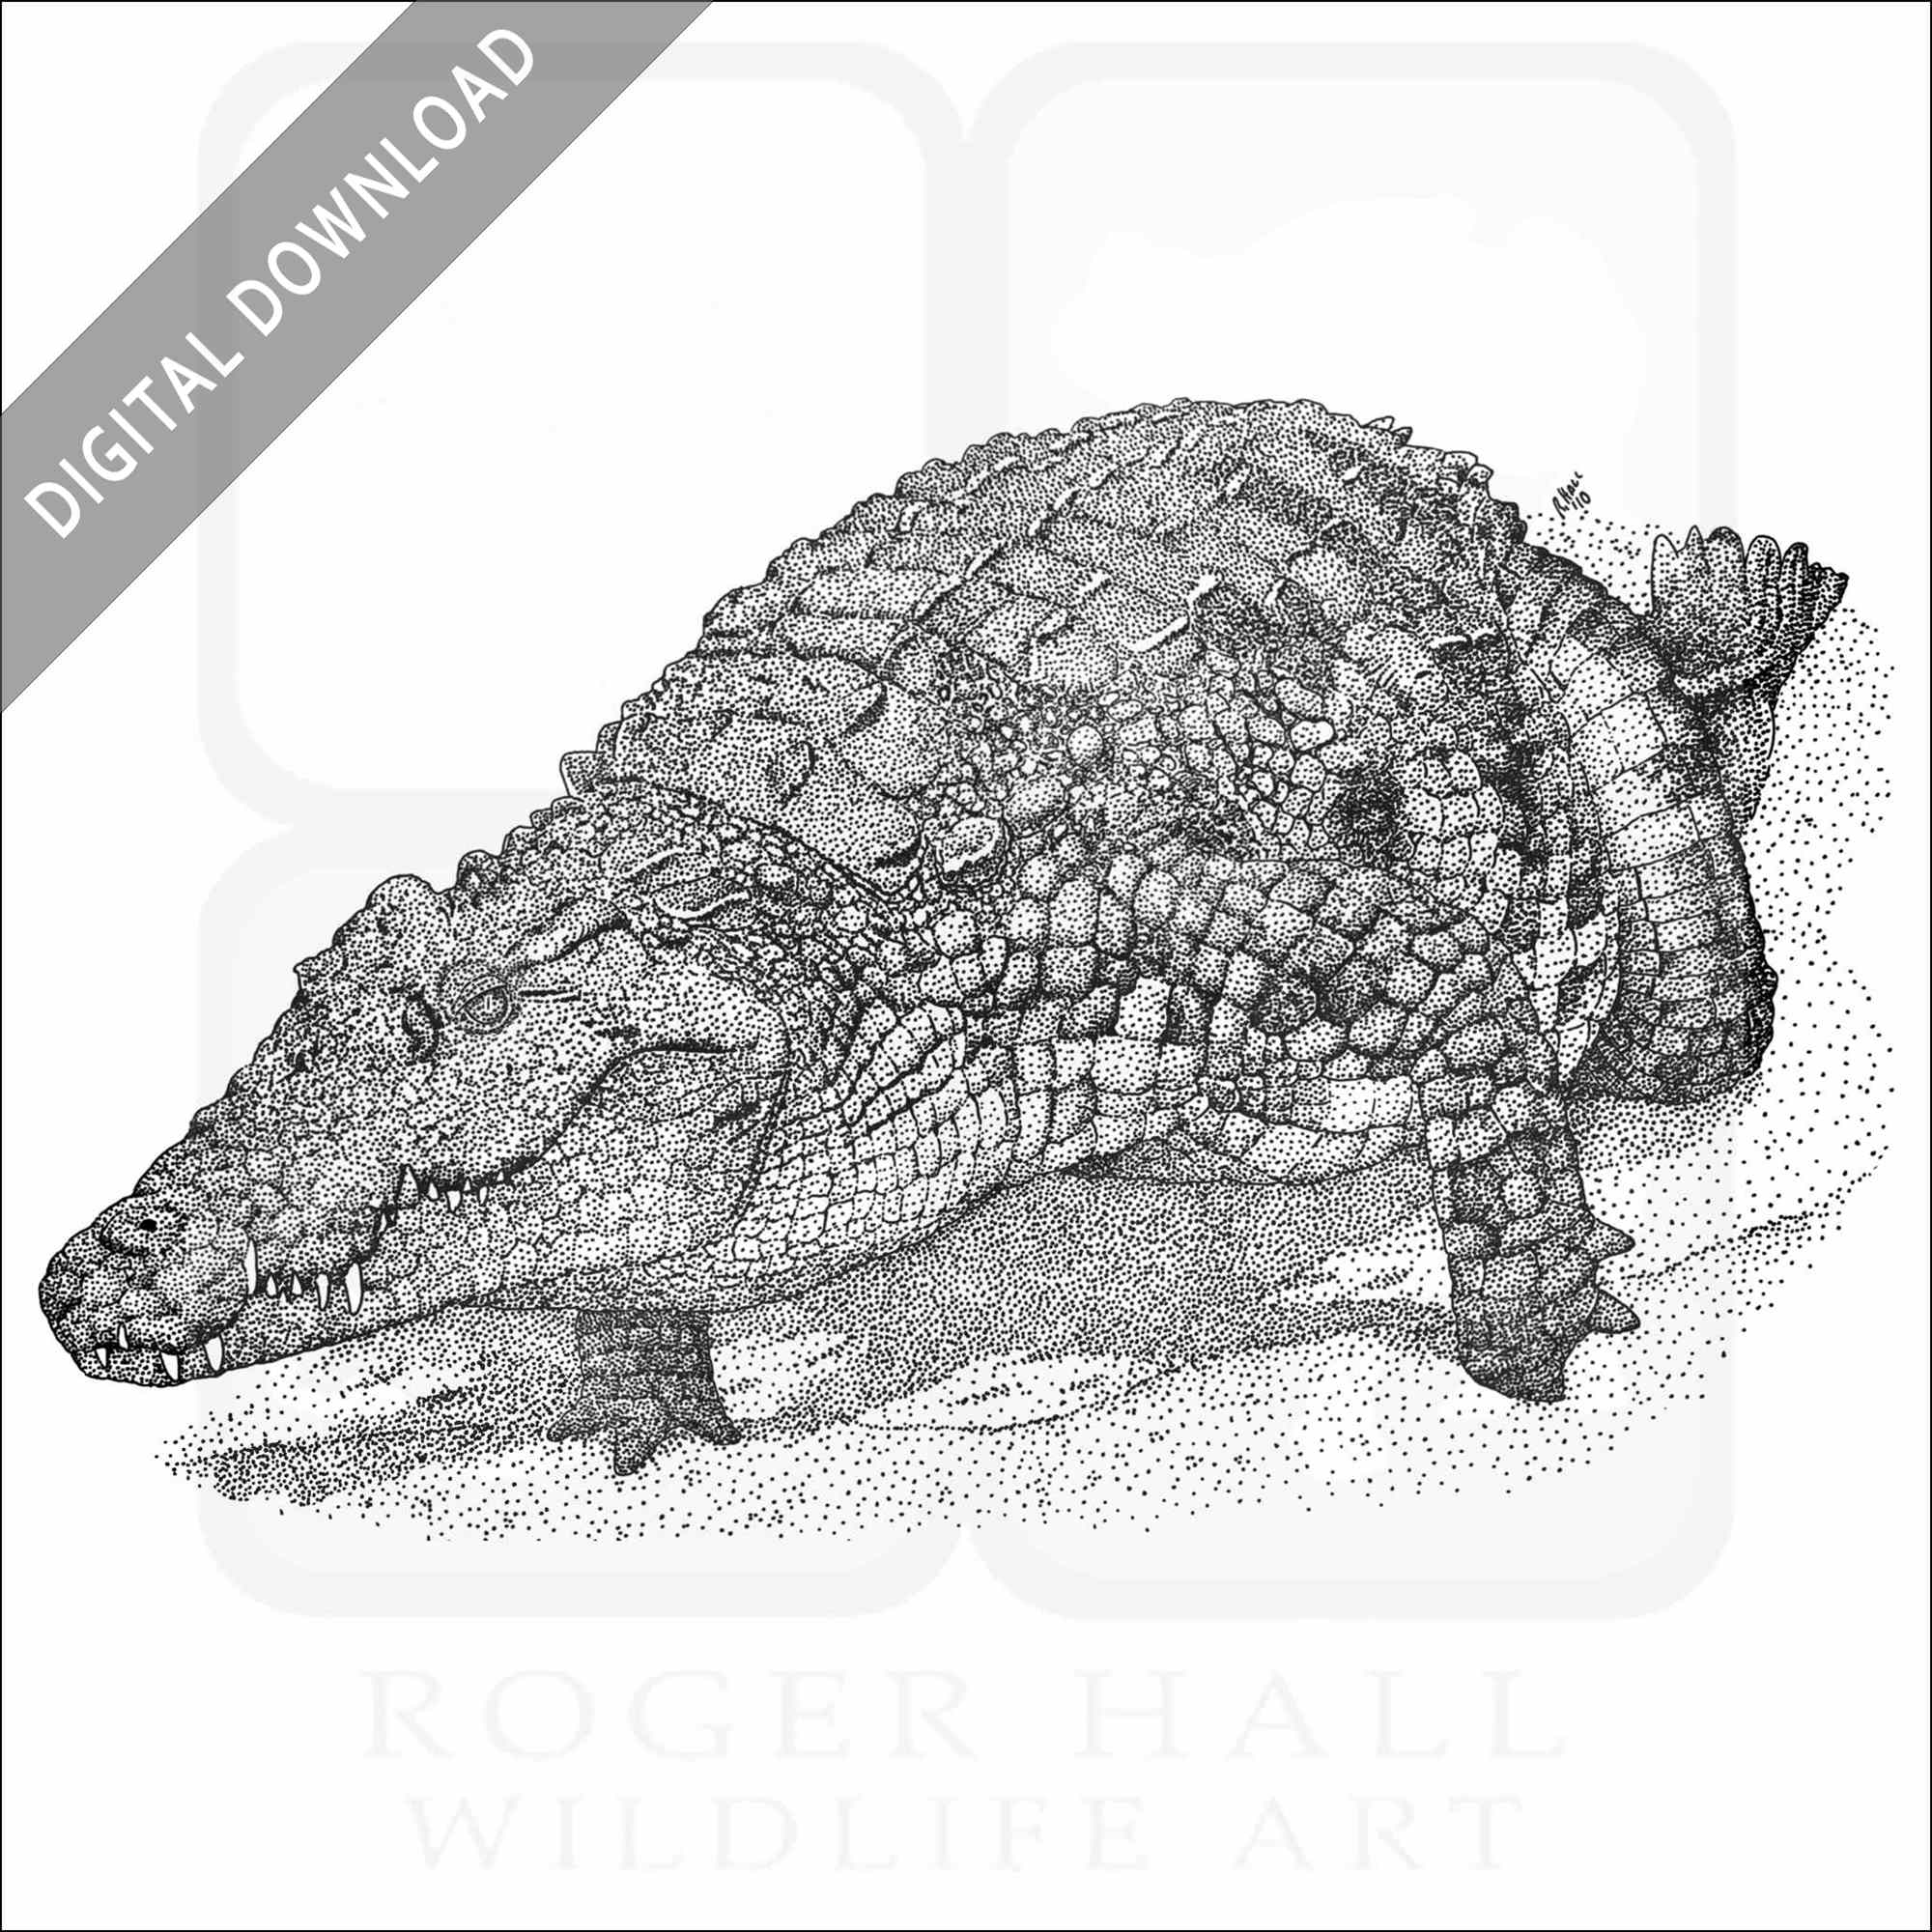 Stock art drawing of a nile crocodile